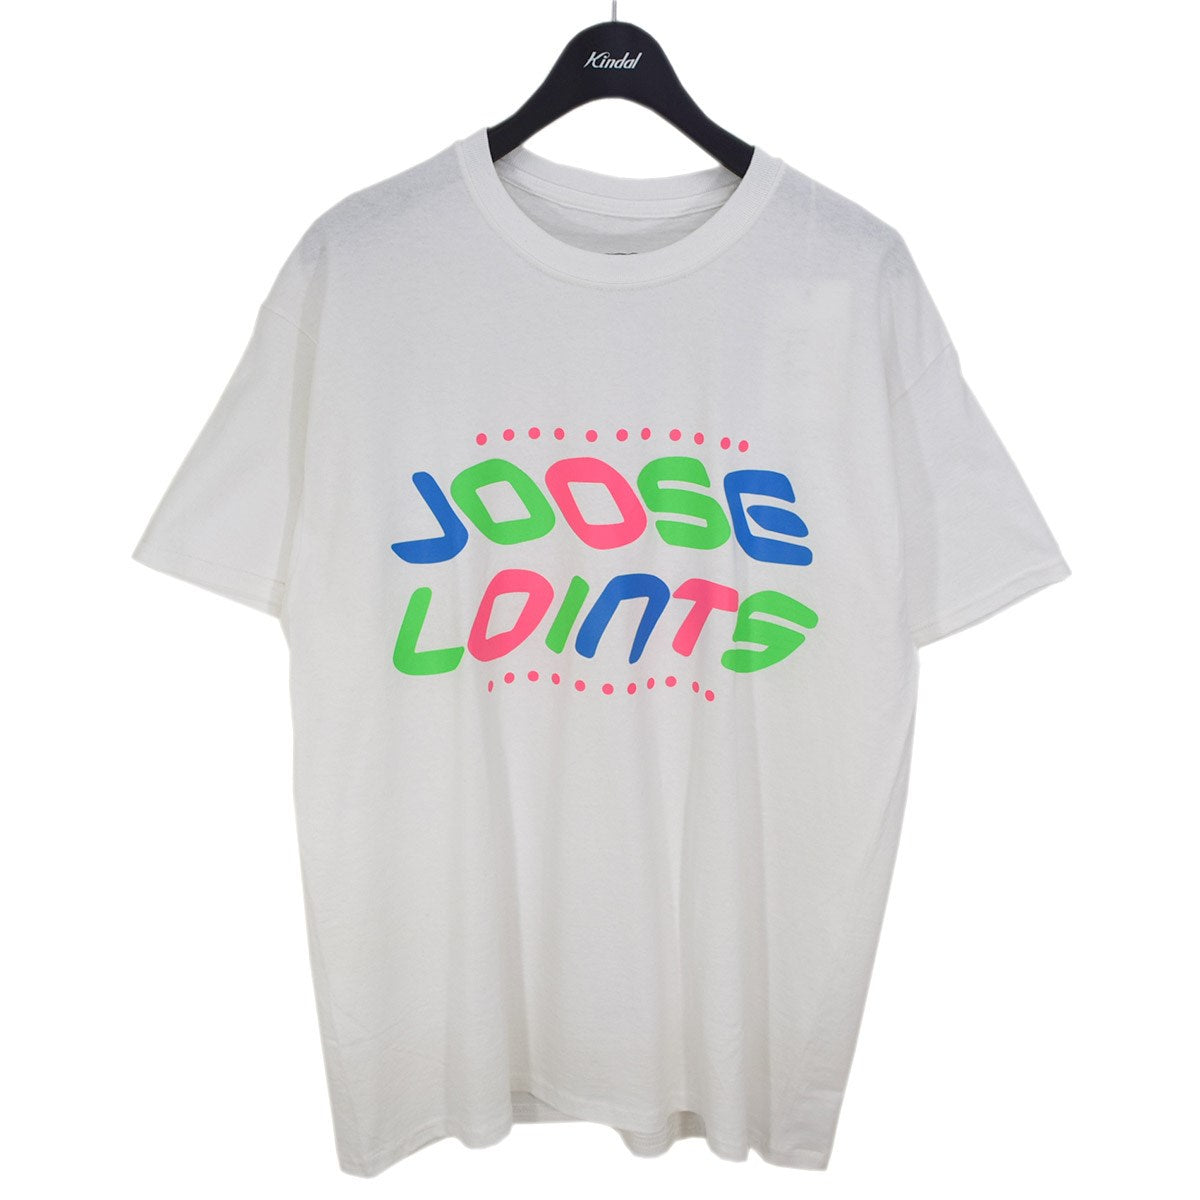 Joose Loints プリントTシャツ 2020SS